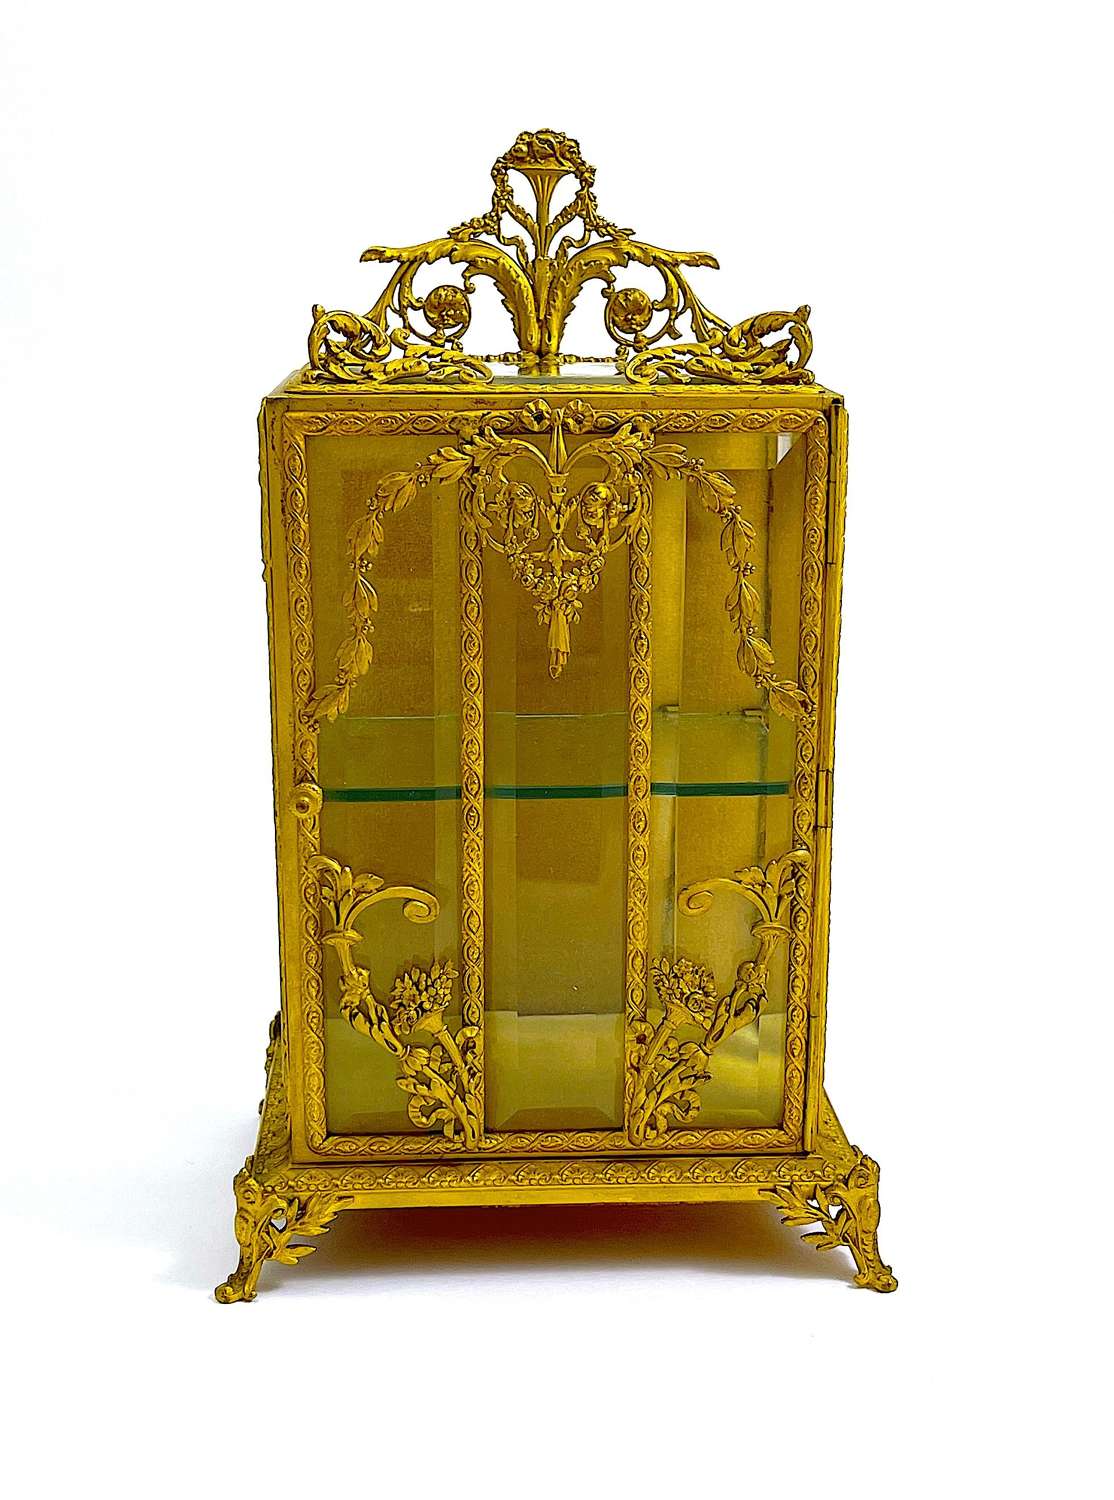 Super High Quality Antique French Vitrine Box with a Fine Dore Bronze